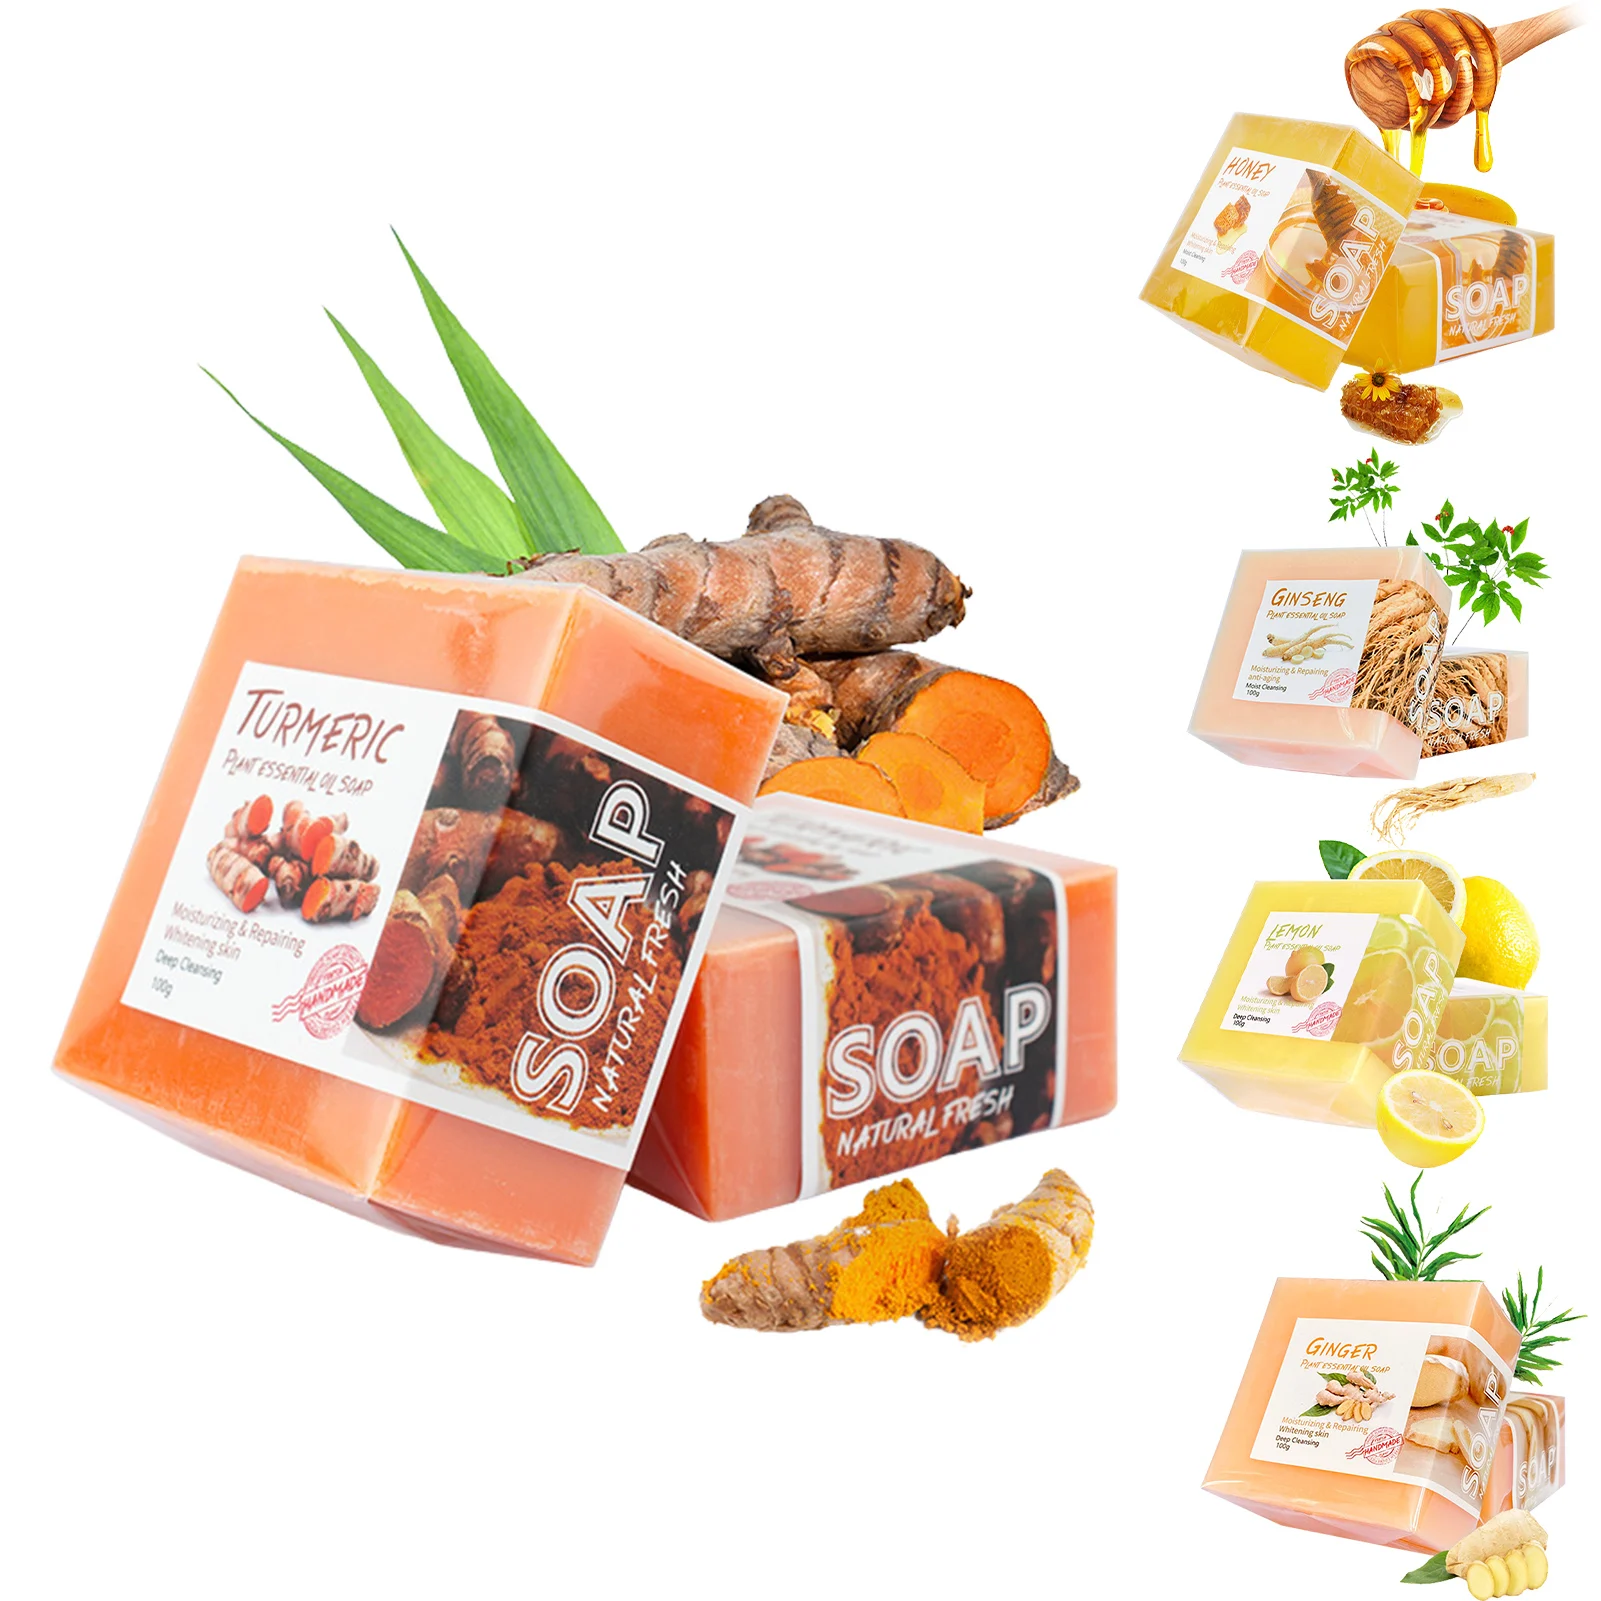 

Herbal Soap Bars Cleansing Bar Soaps Variety Pack Organic Ingredients Bar Soap 5 PCS Bar Soaps Gift Set For Washing Hair Face